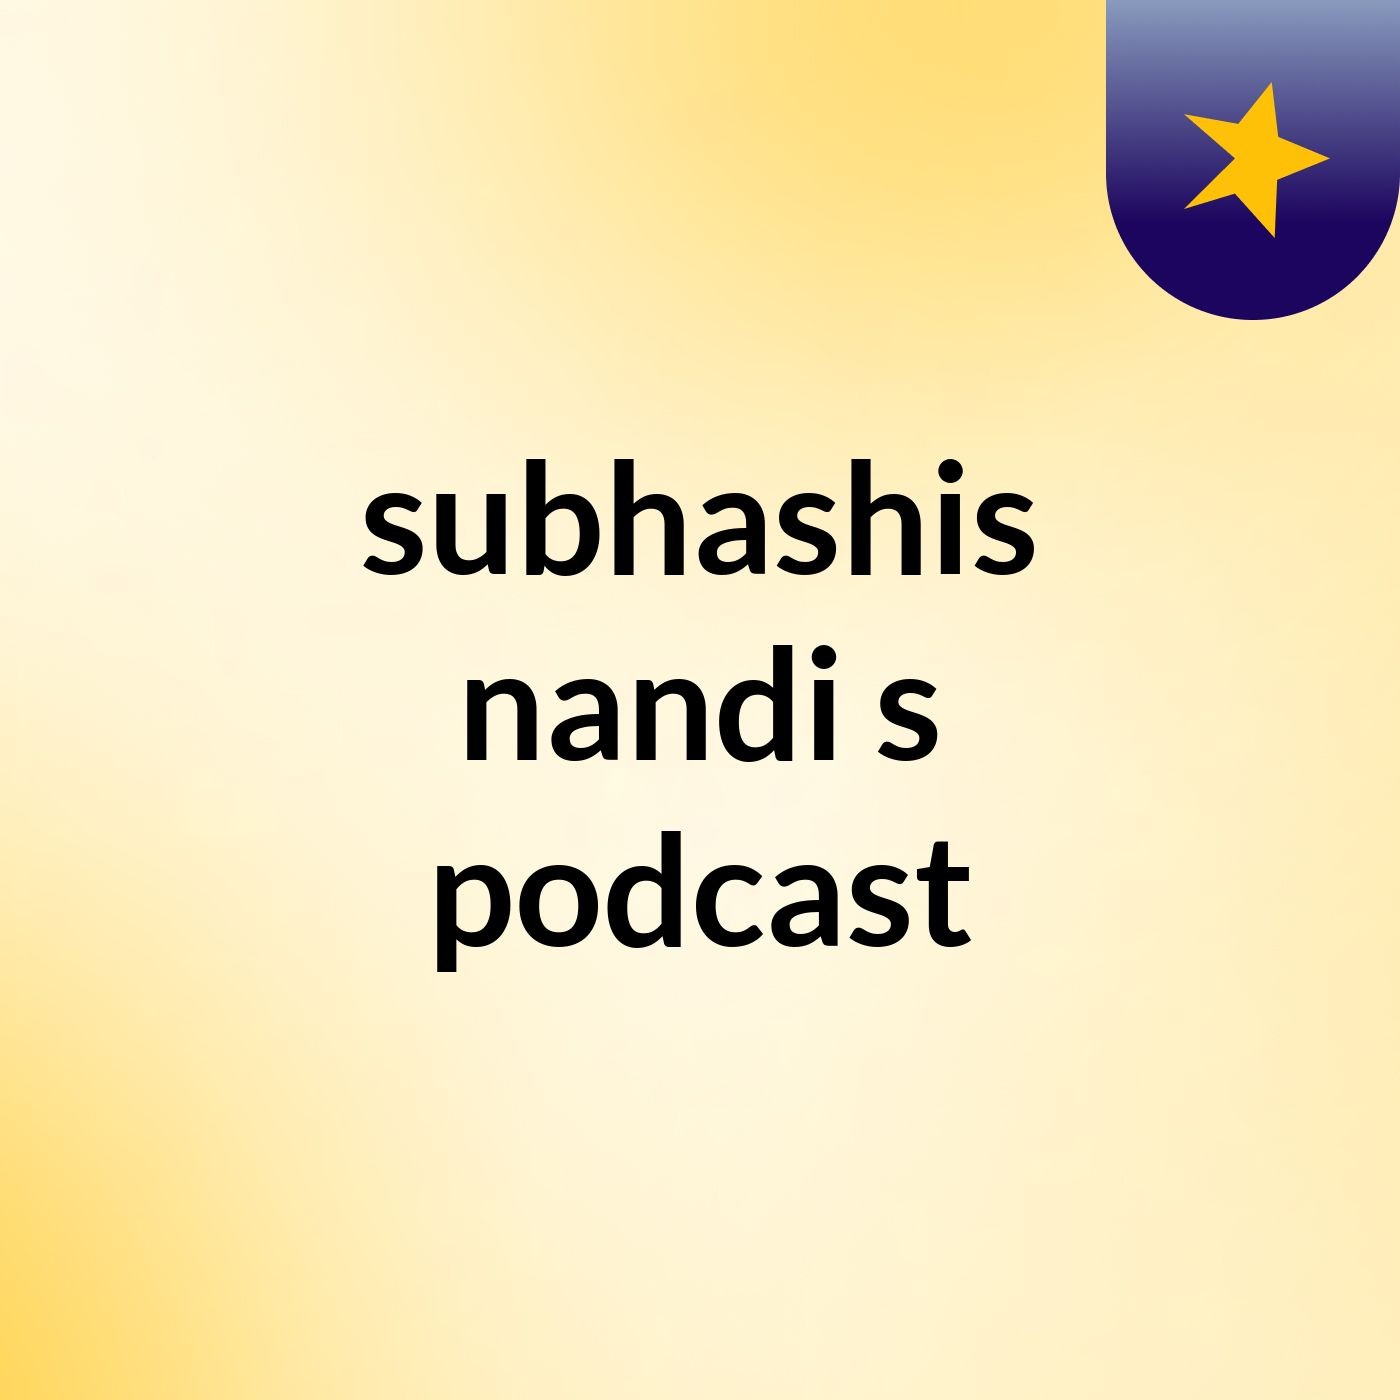 Episode 2 - subhashis nandi's podcast